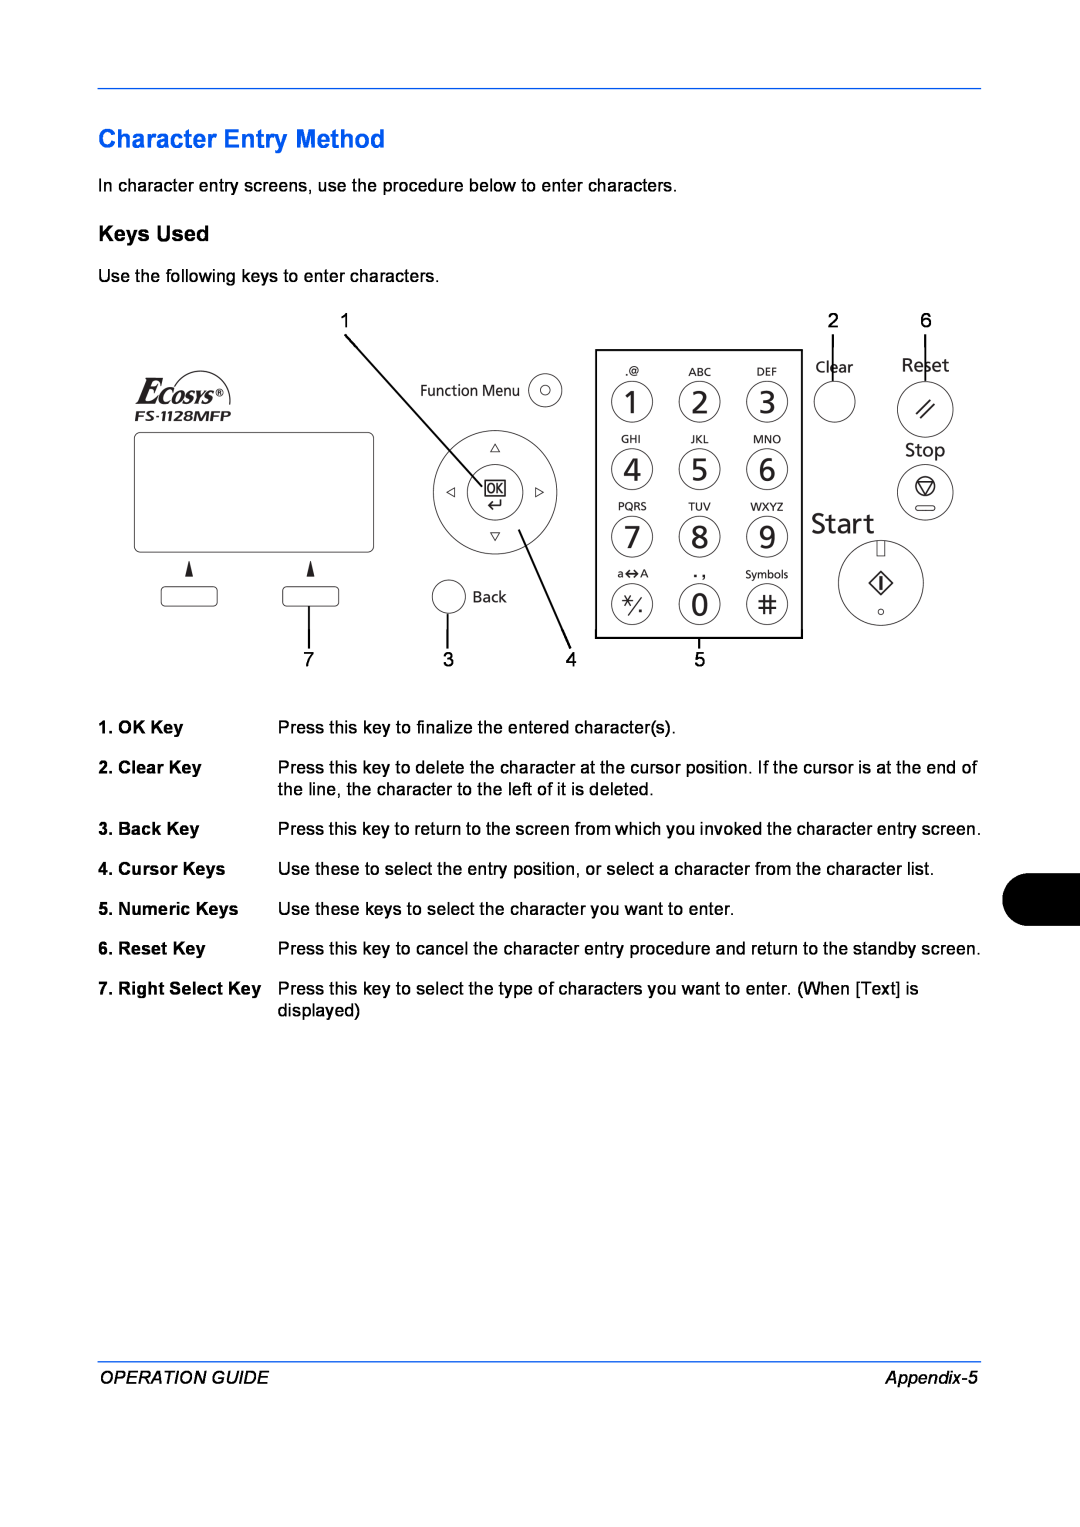 Kyocera FS-1128MFP, FS-1028MFP manual Character Entry Method, Keys Used, Operation Guide, Appendix-5 